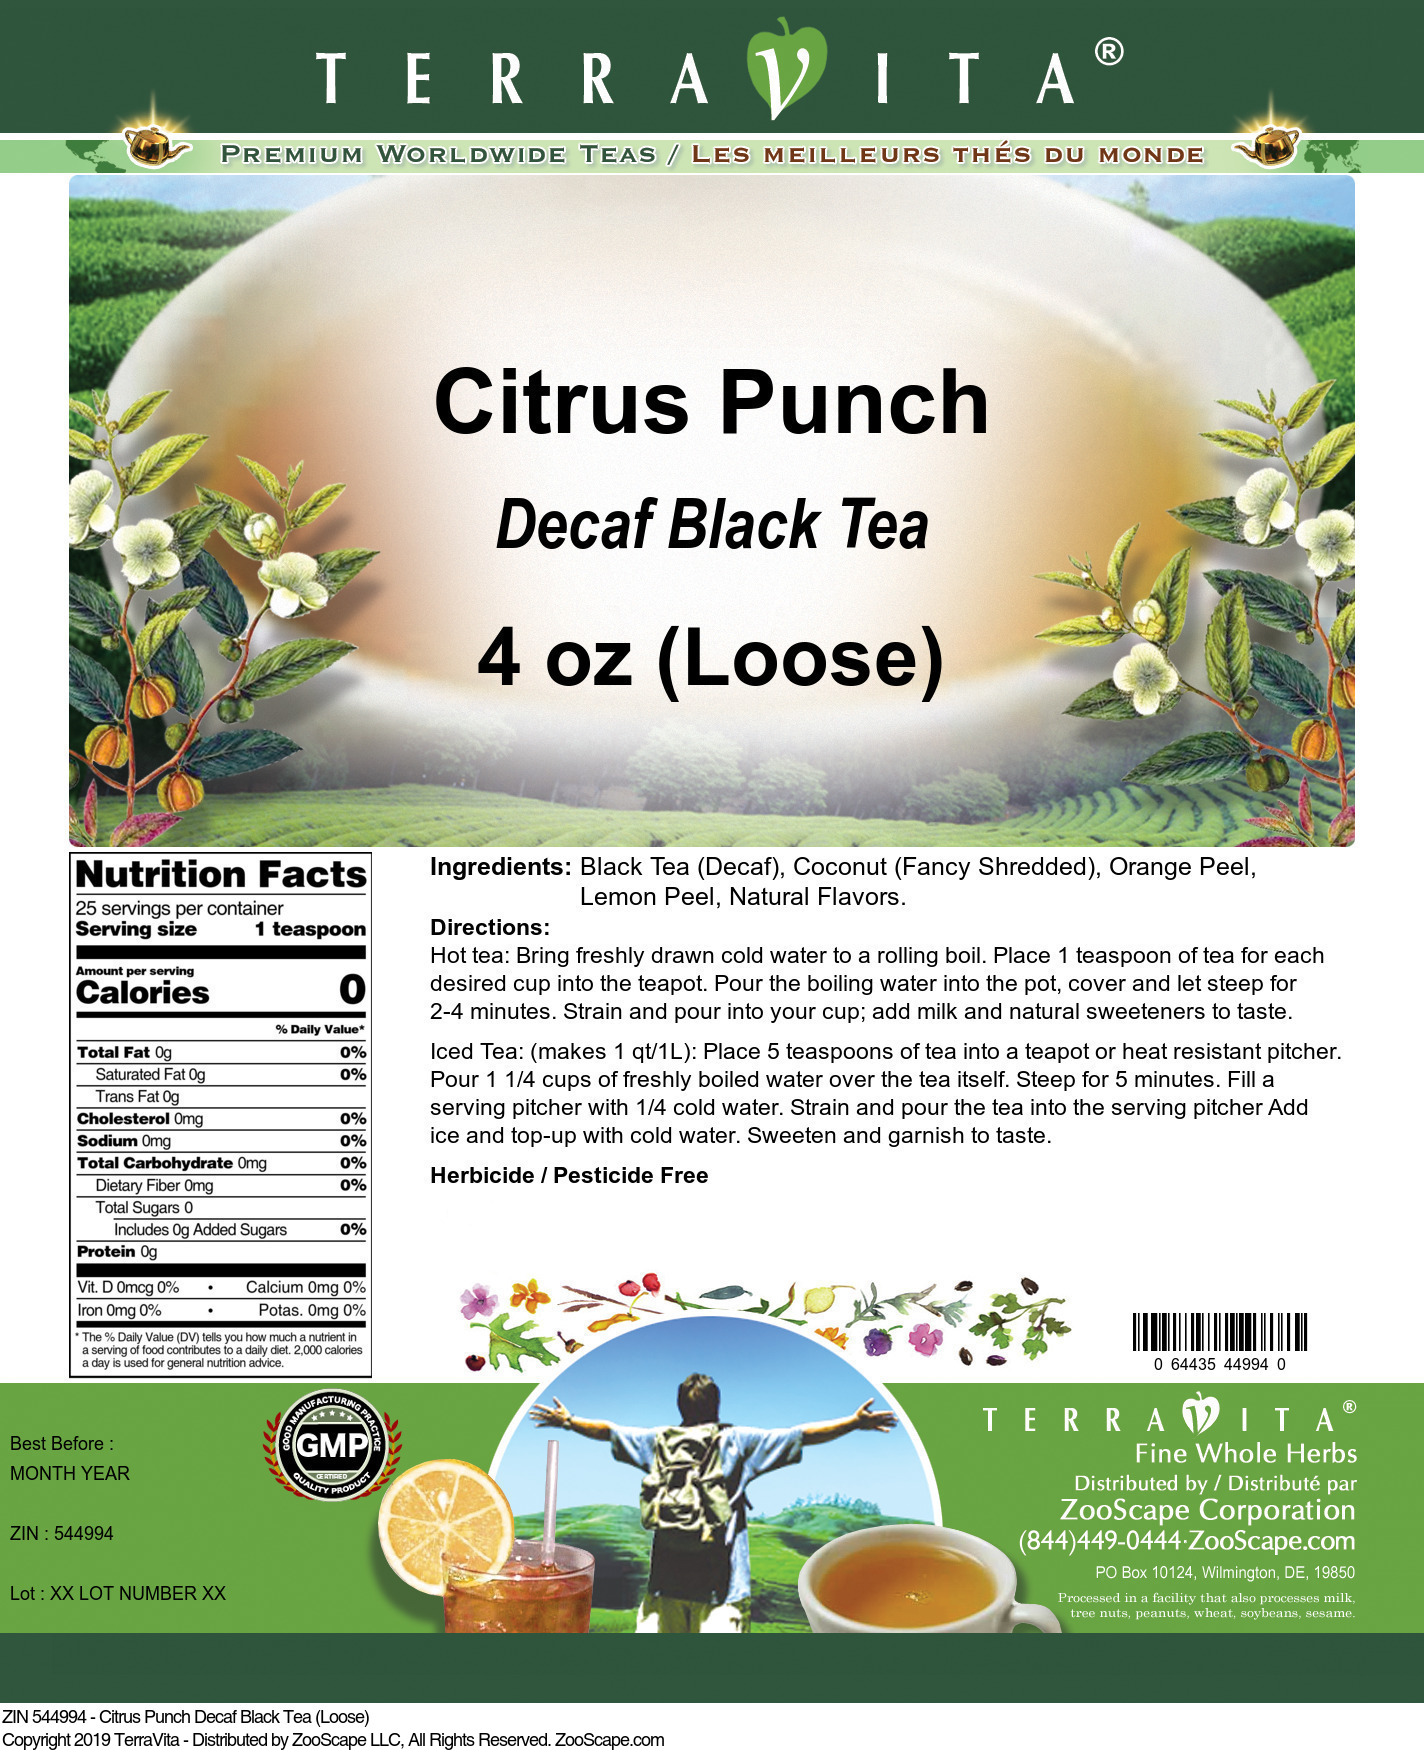 Citrus Punch Decaf Black Tea (Loose) - Label